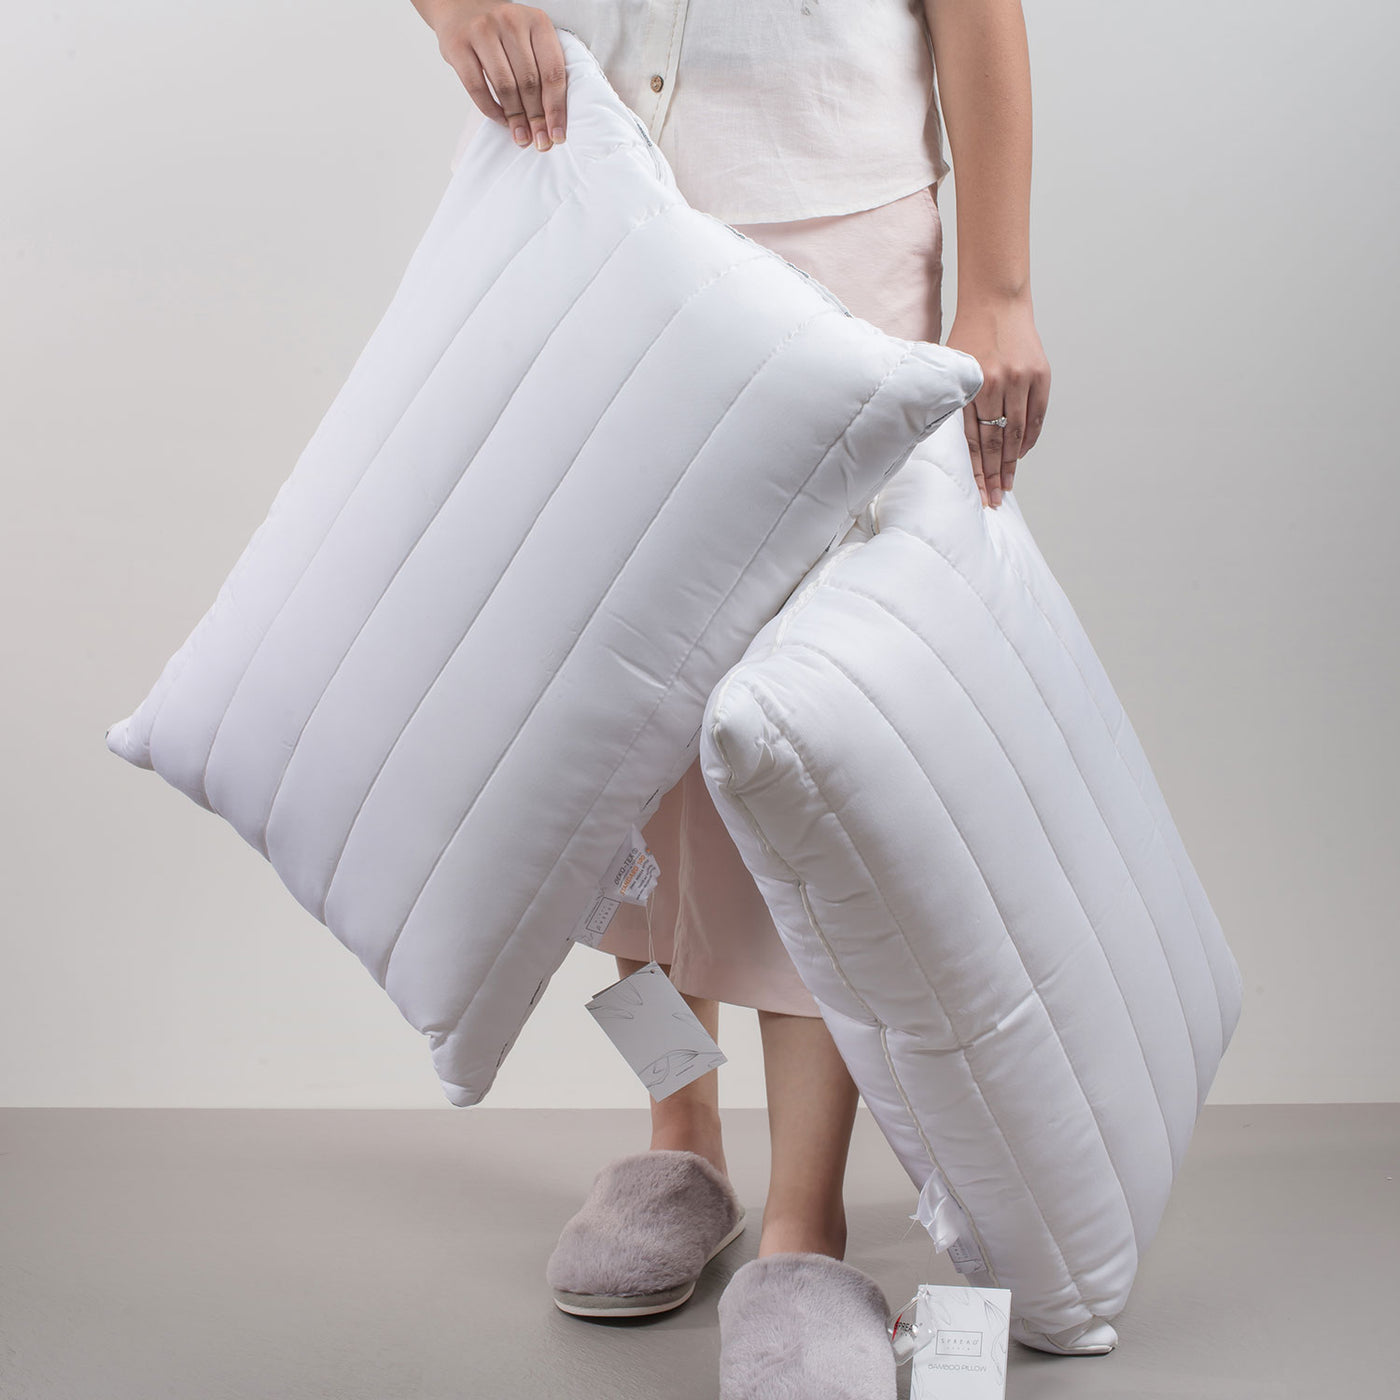 Orthopaedic Bamboo Pillow